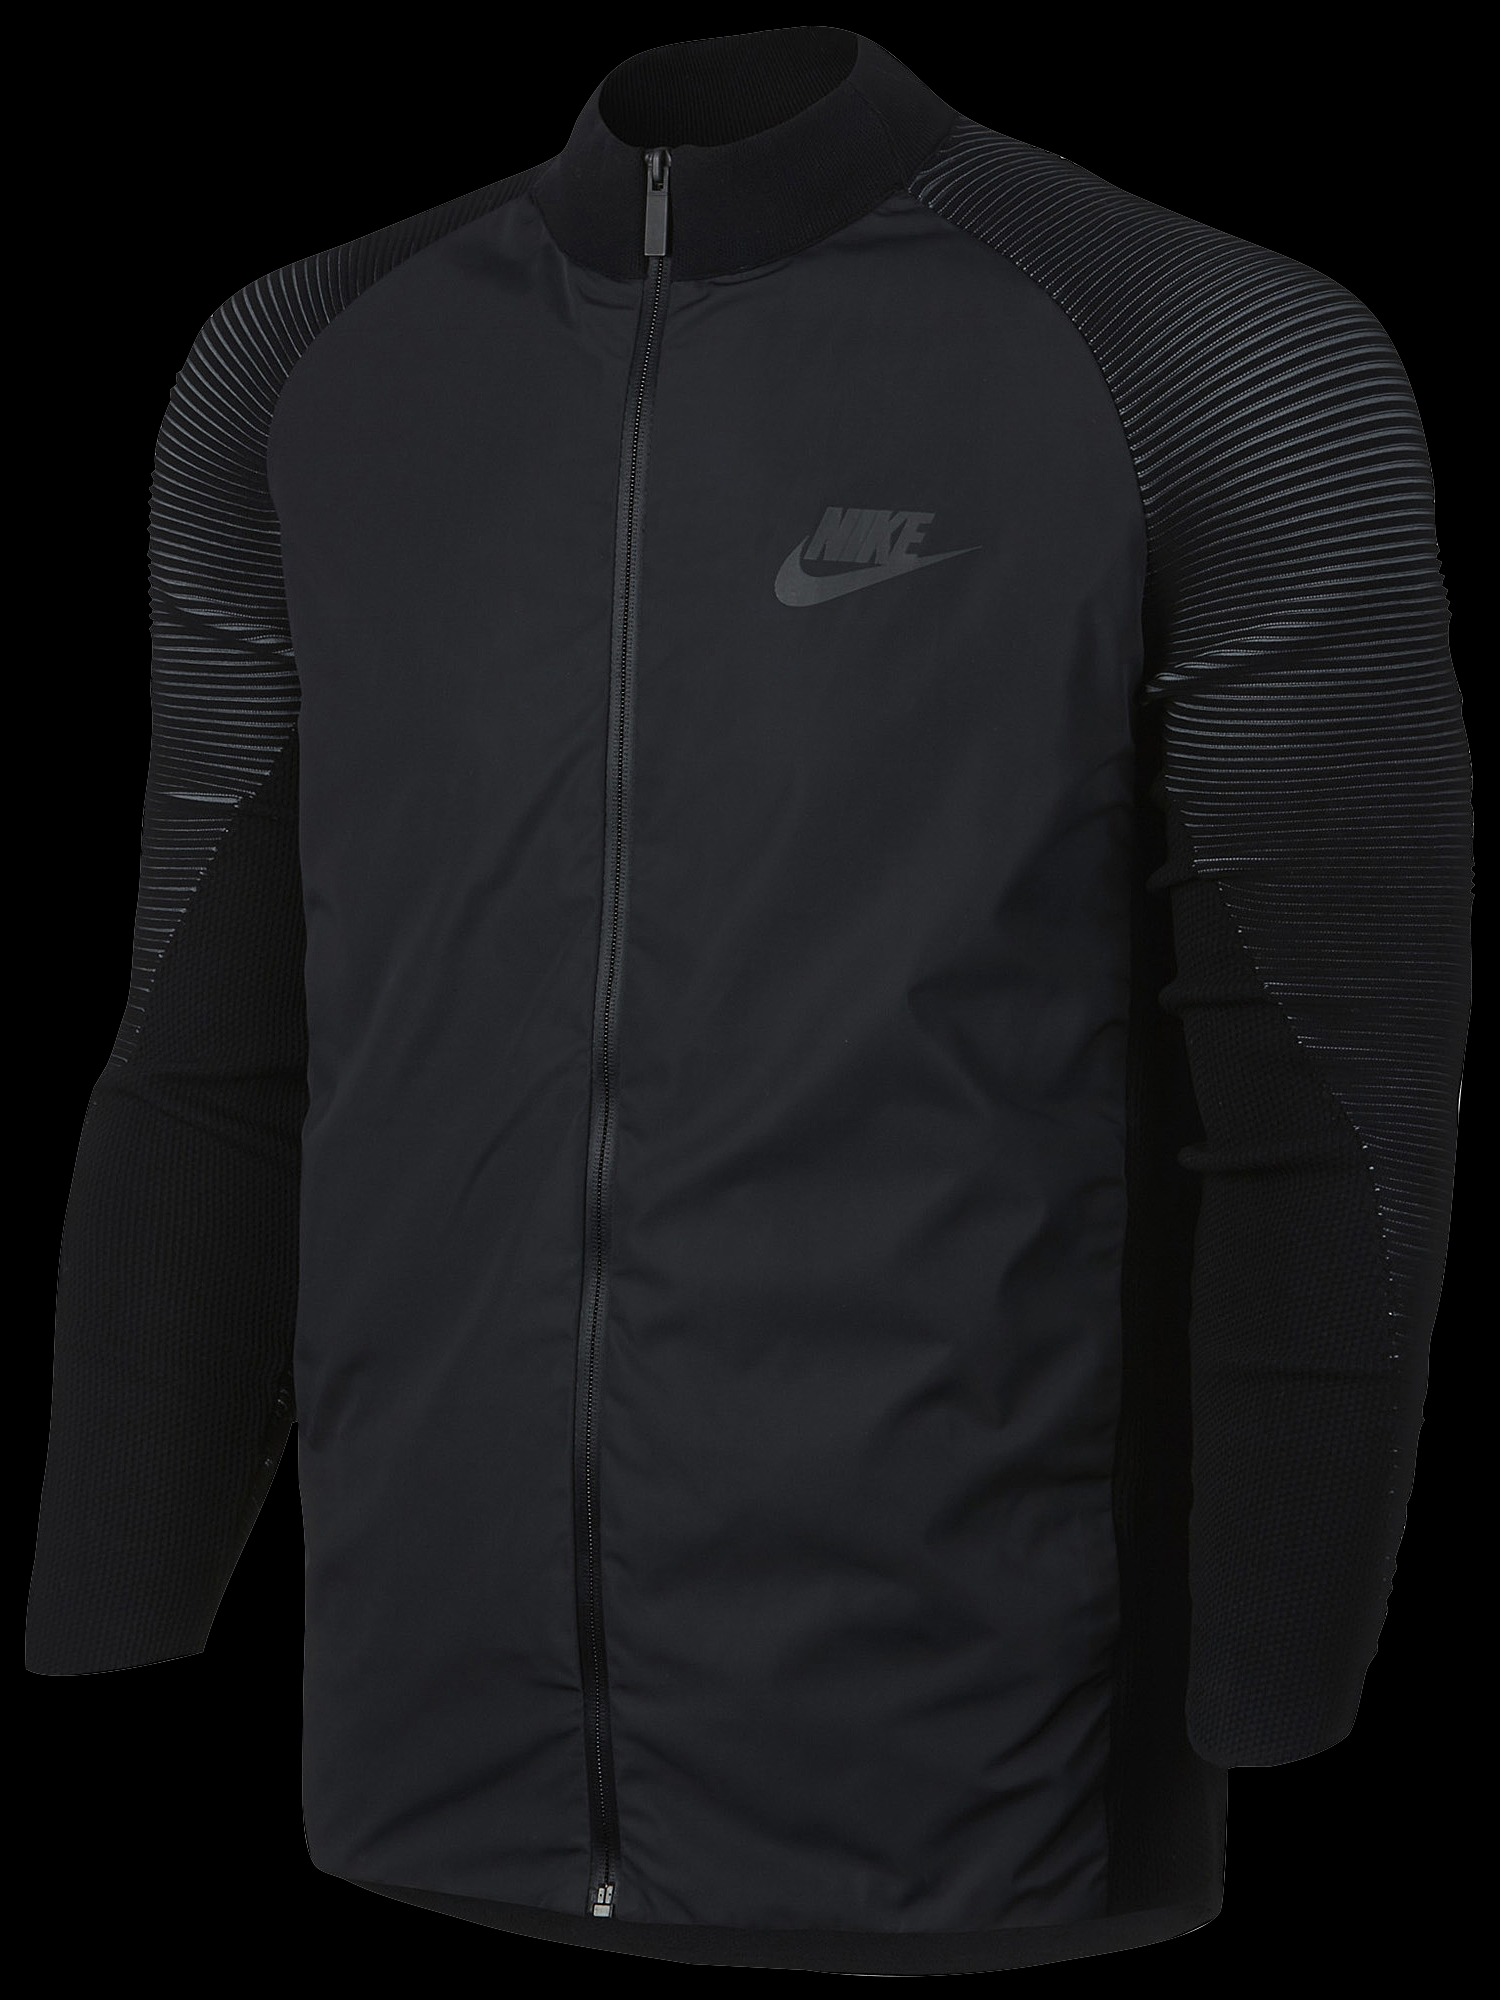 Nike Dynamic Reveal Jacket at Foot Locker, $249.99